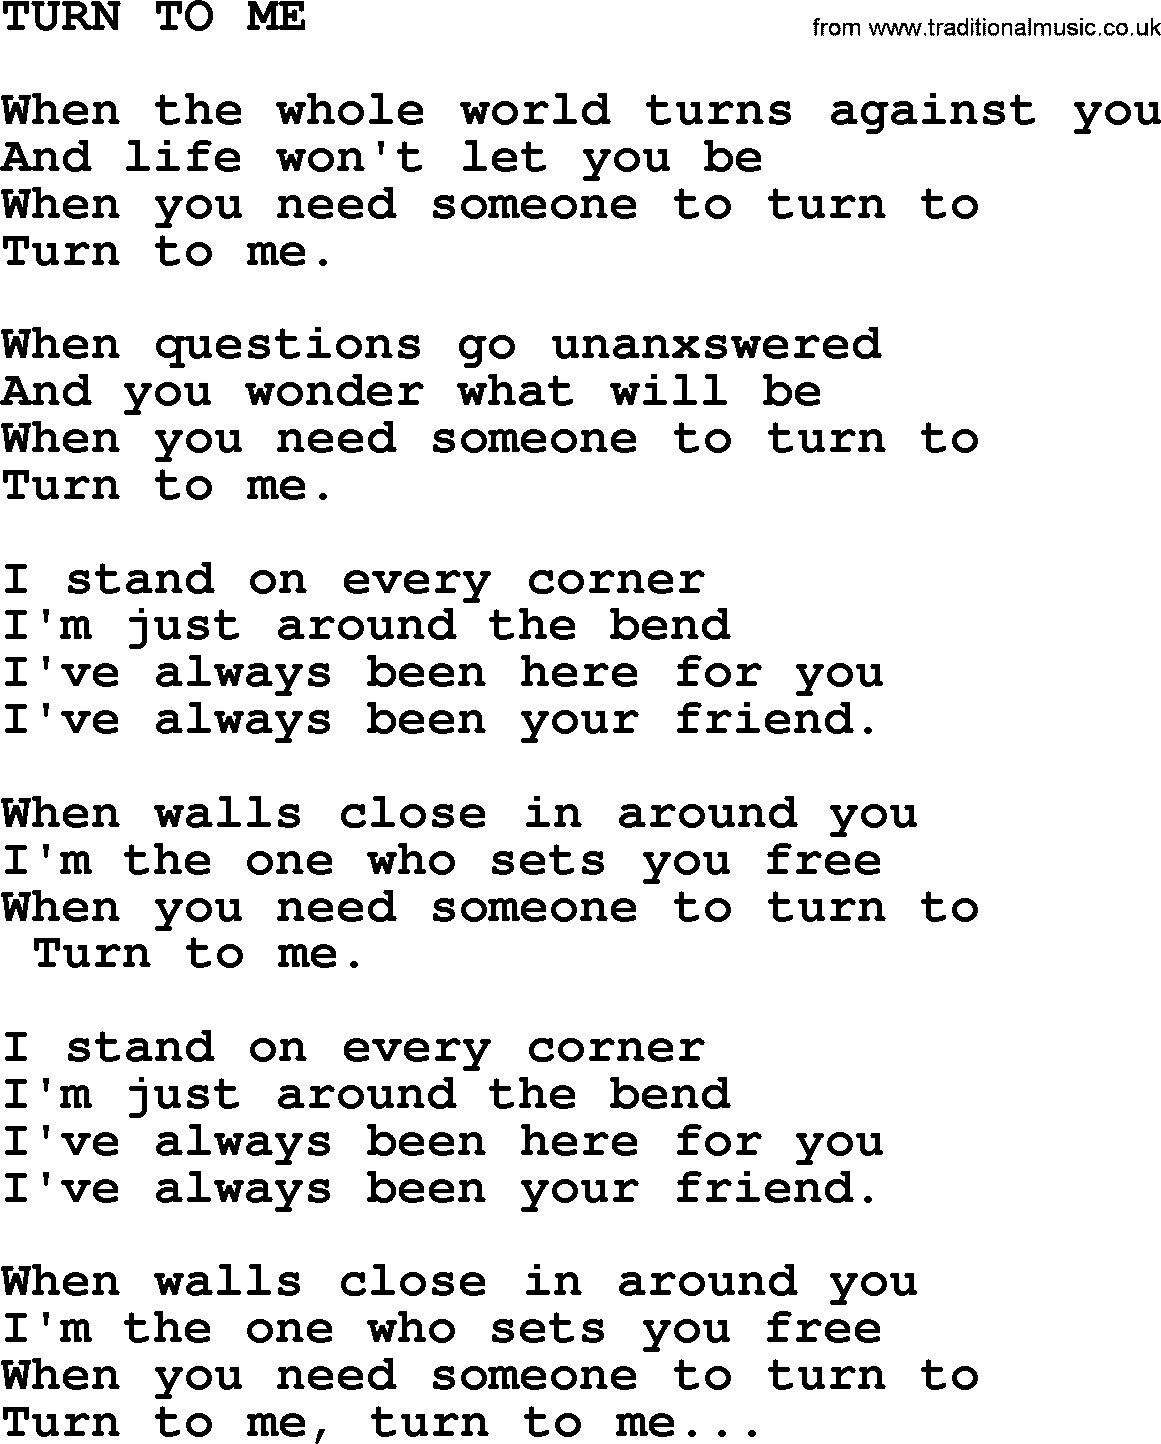 Merle Haggard song: Turn To Me, lyrics.